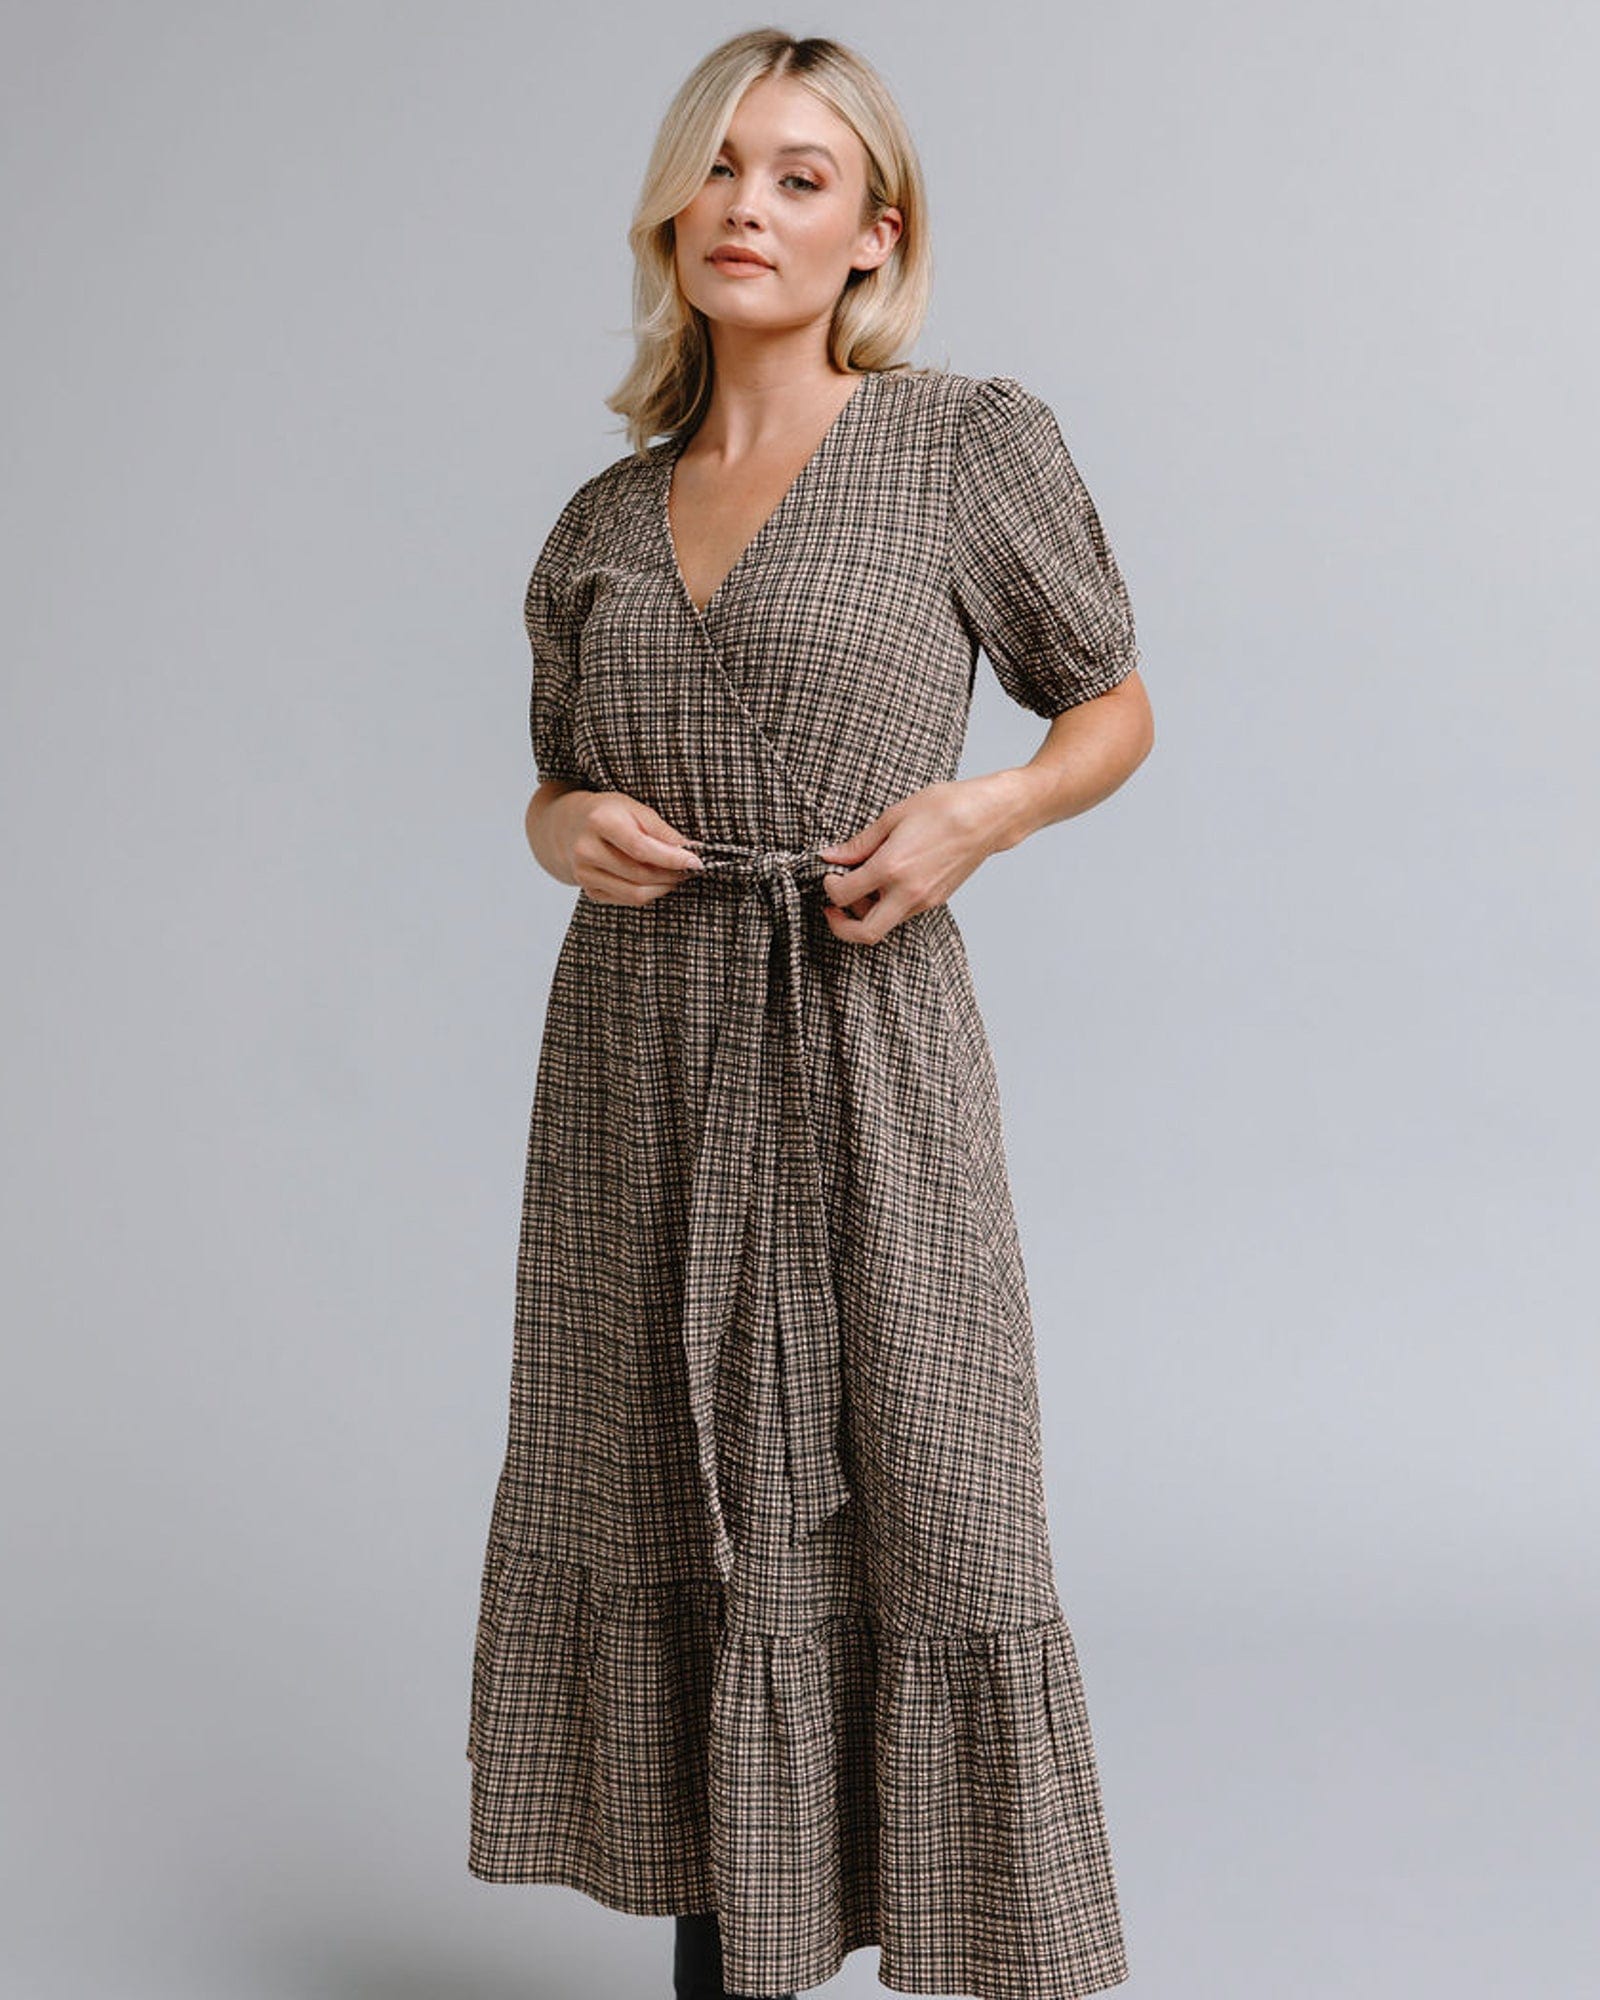 Woman in a short sleeve, midi-length, plaid dress